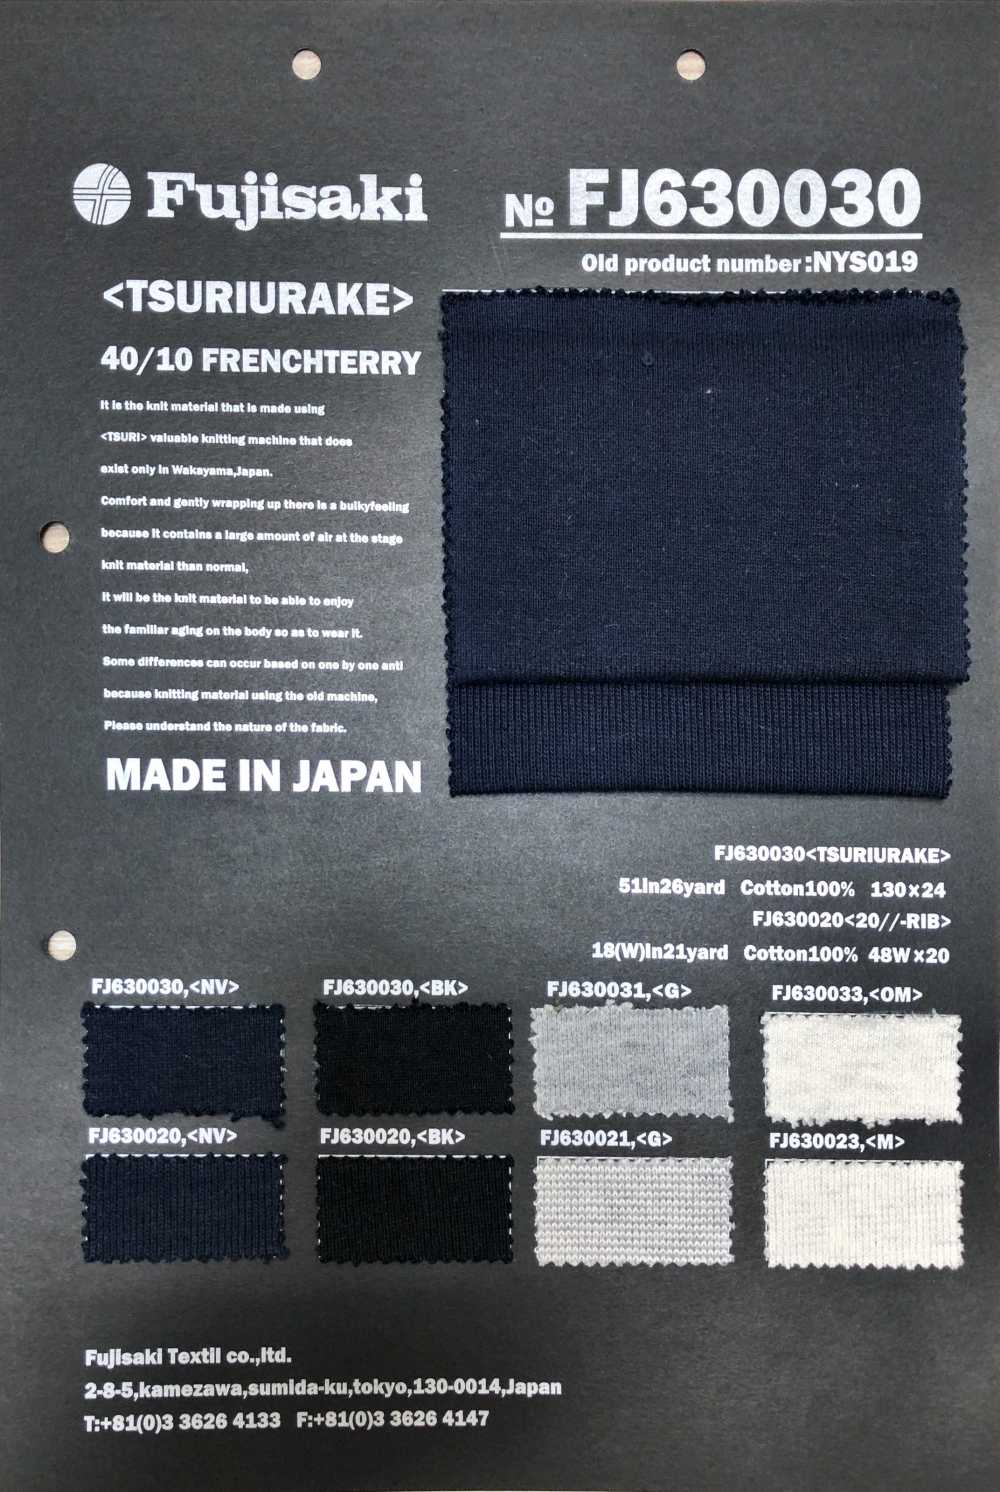 FJ630021 20//- 리브[원단] Fujisaki Textile